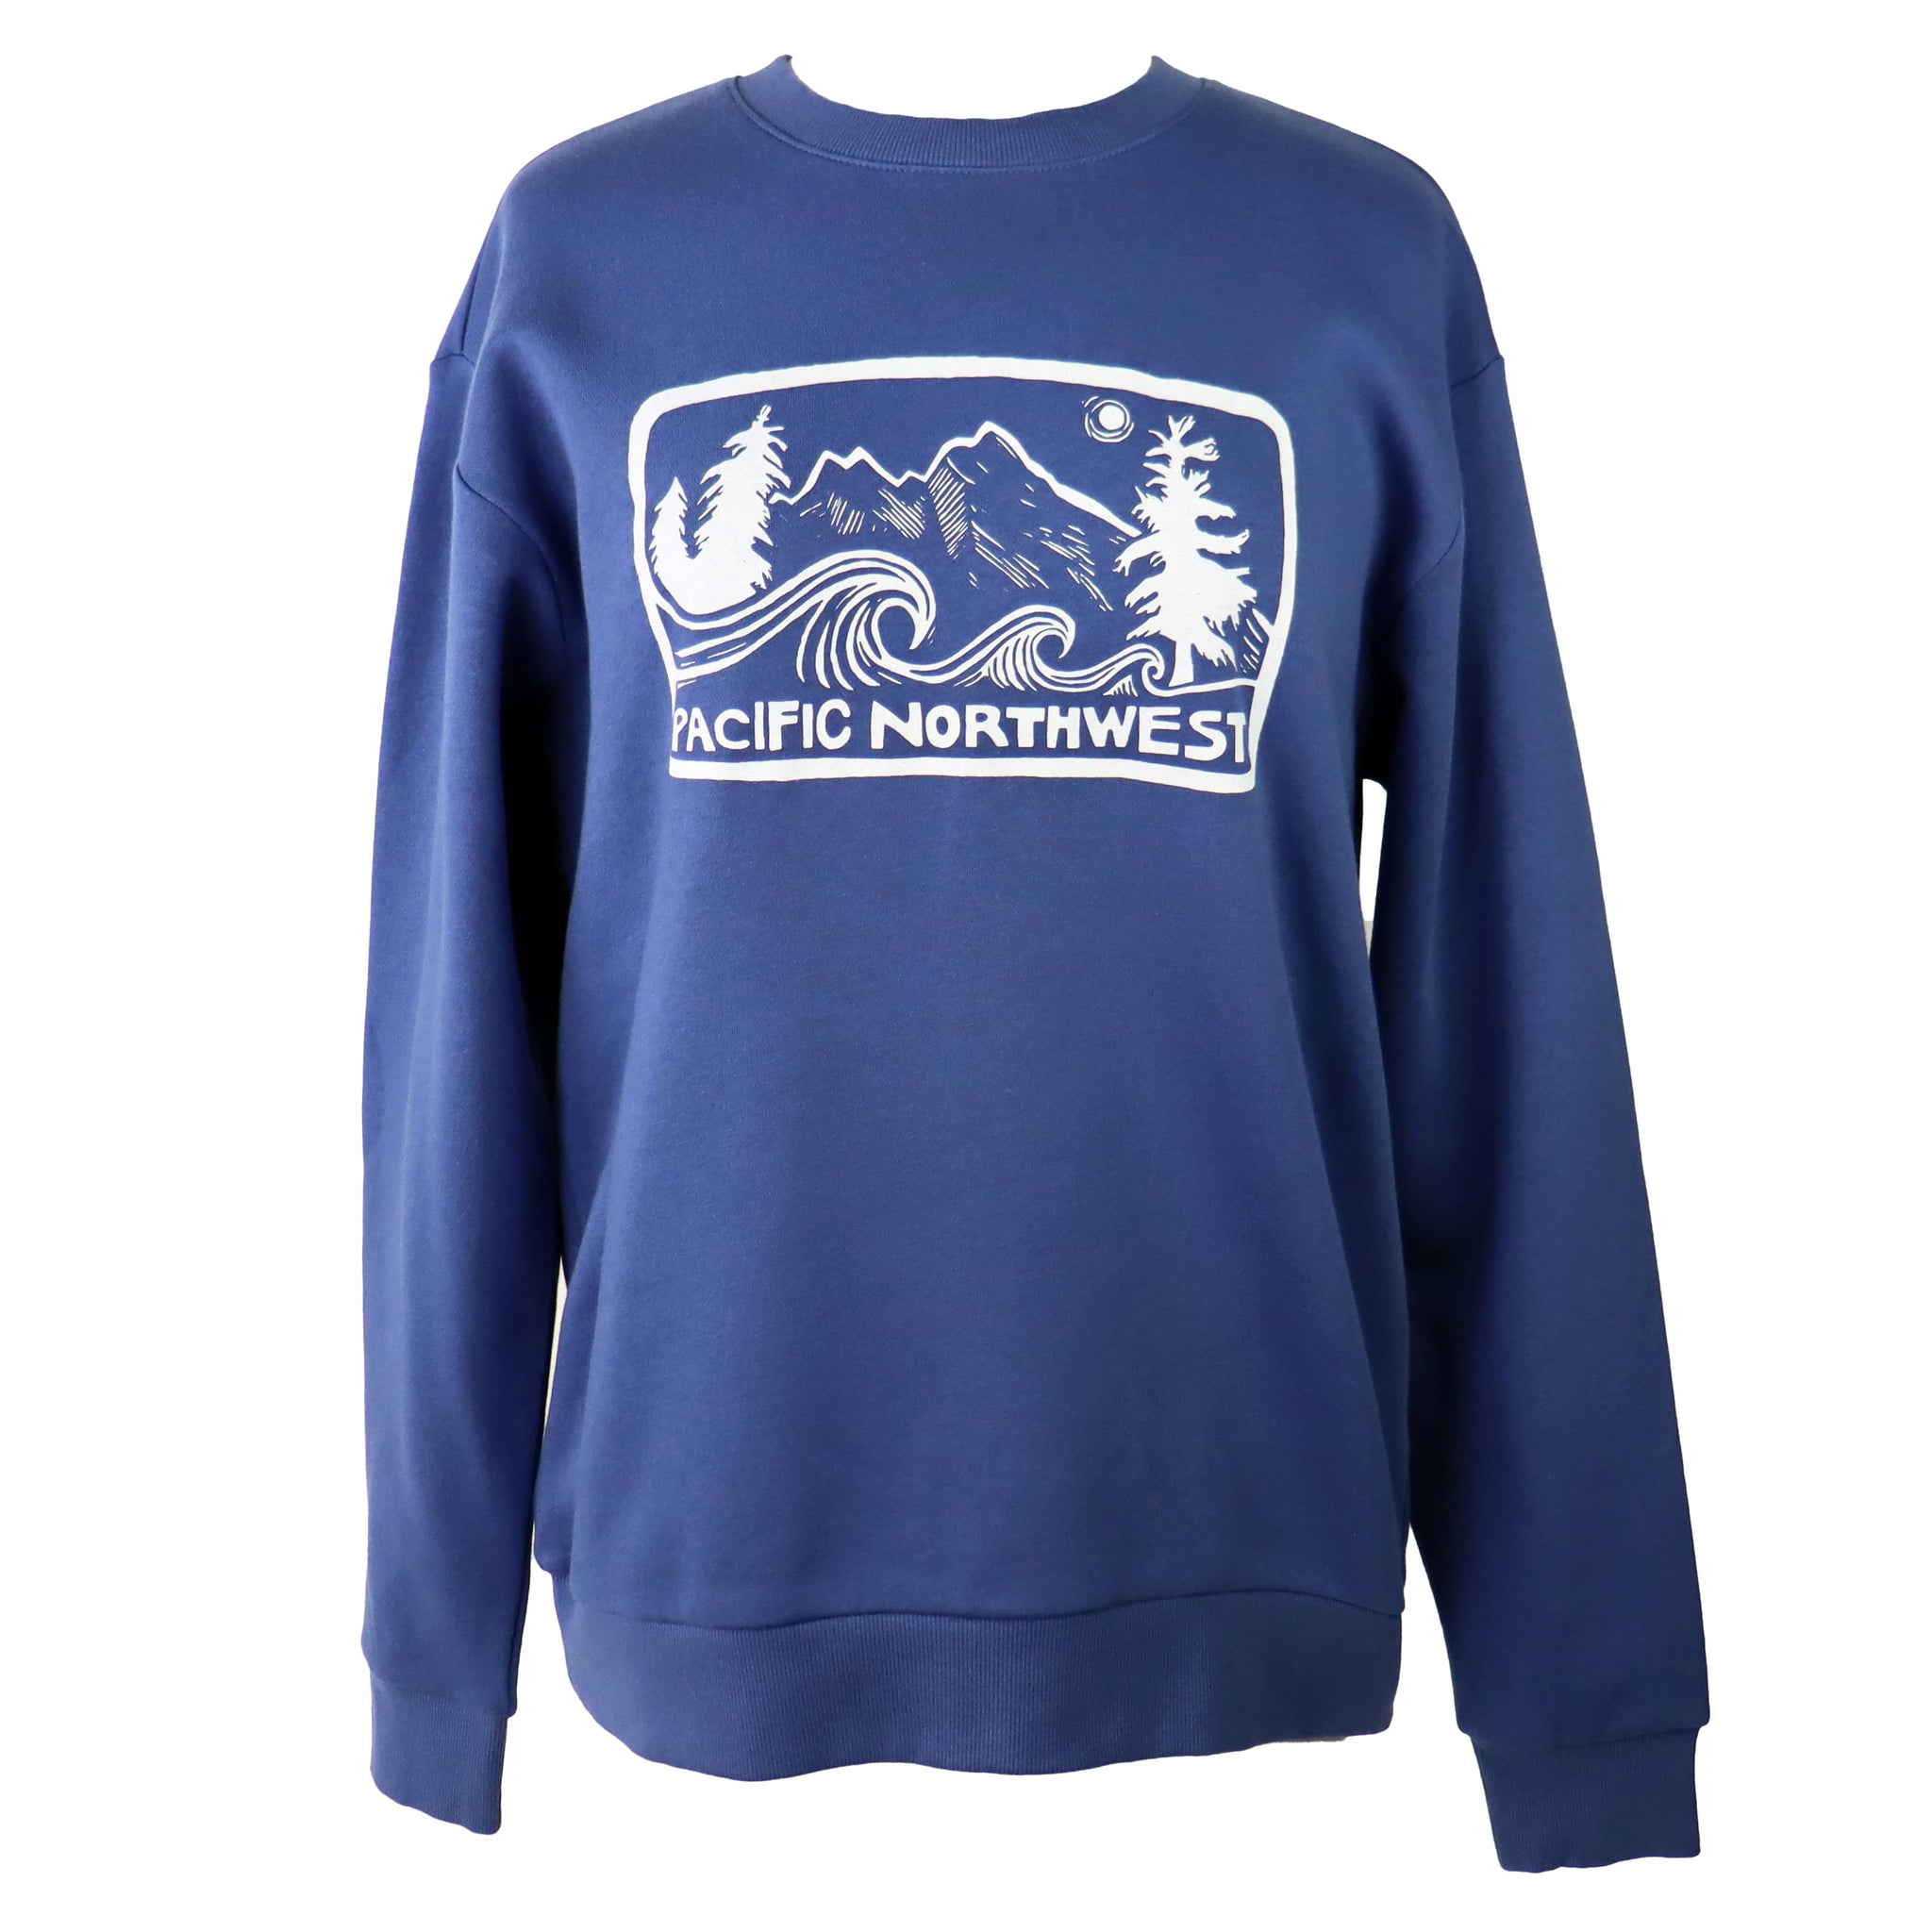 Pacific Northwest 2.0 Unisex Fleece Crewneck Sweatshirt in Muted Royal Blue